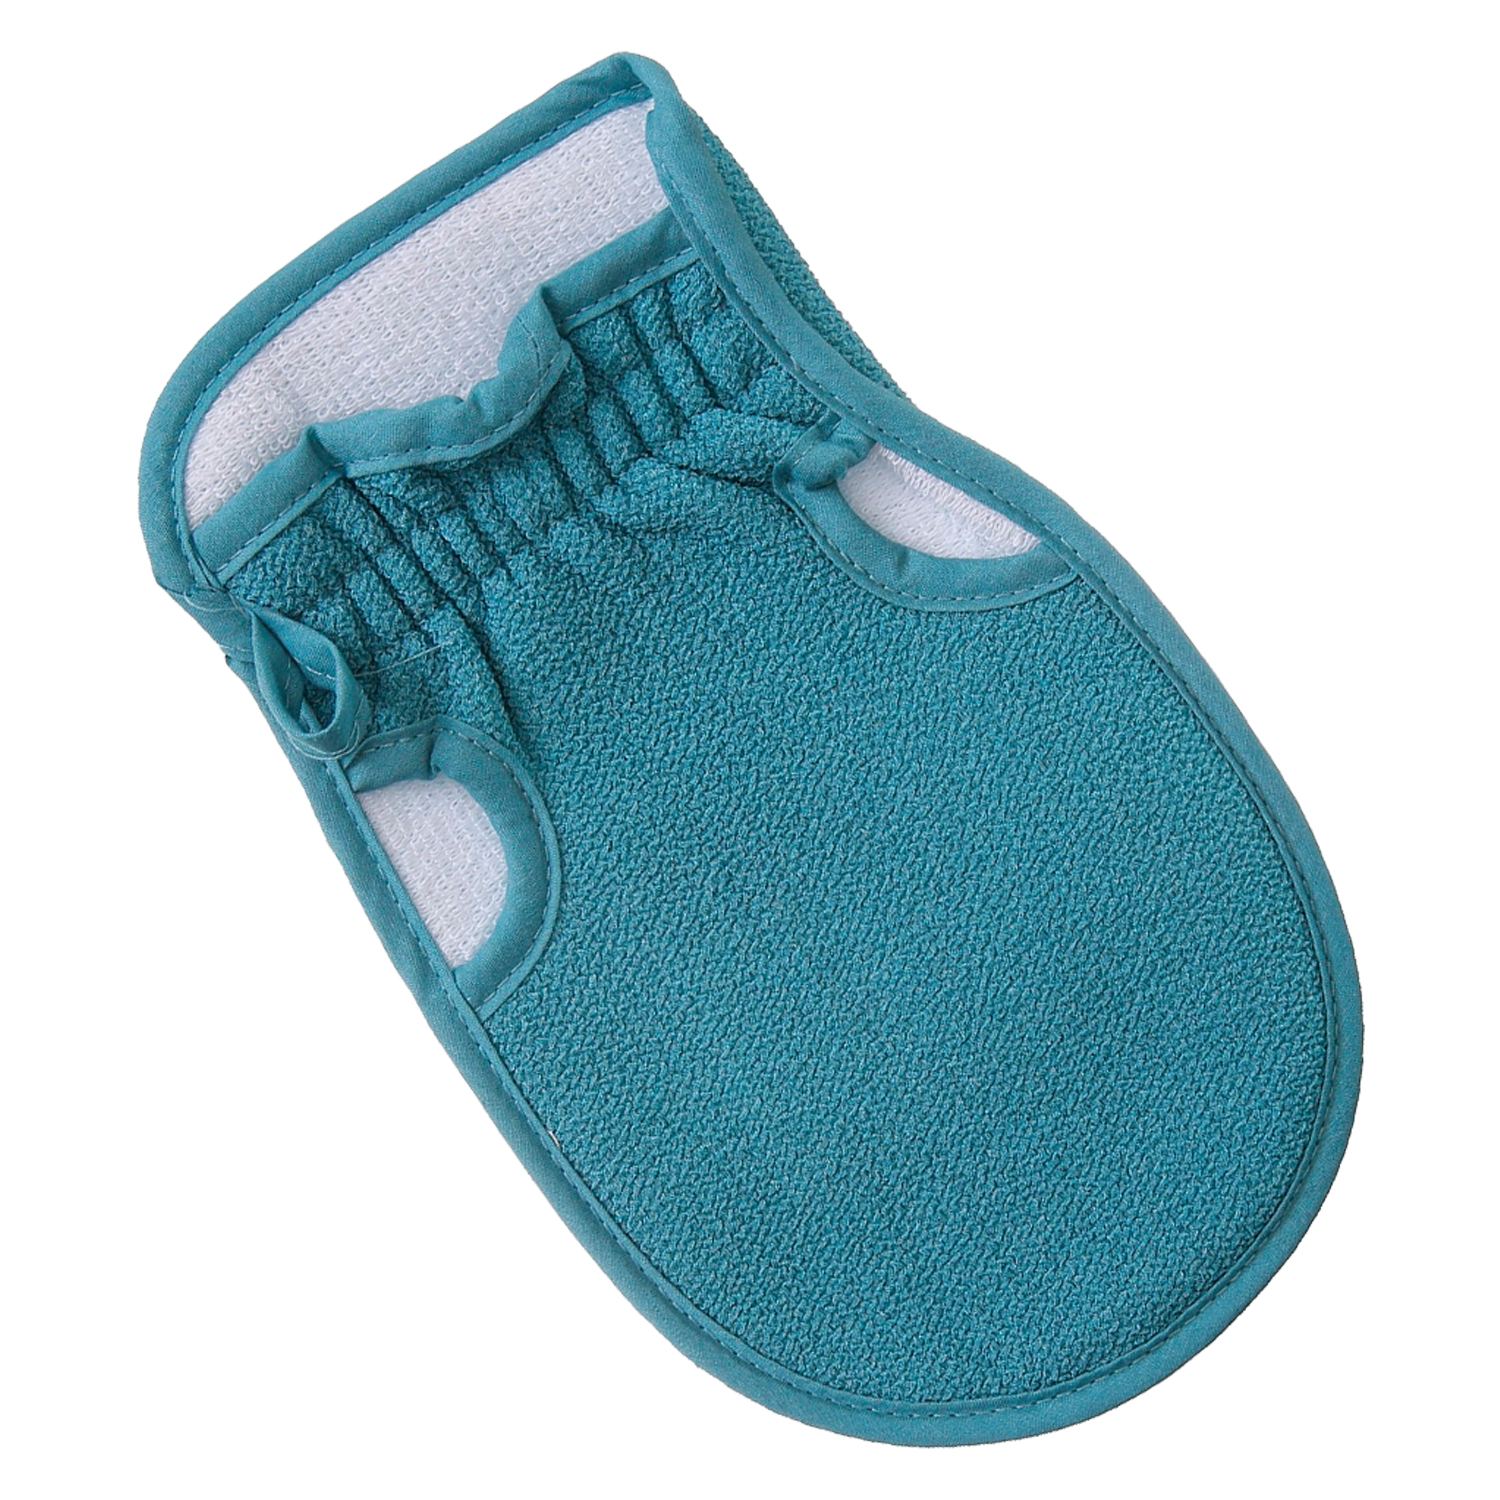 Мочалка-рукавица, VenusShape, цвет серо-голубой, 23х14 см рукавицы